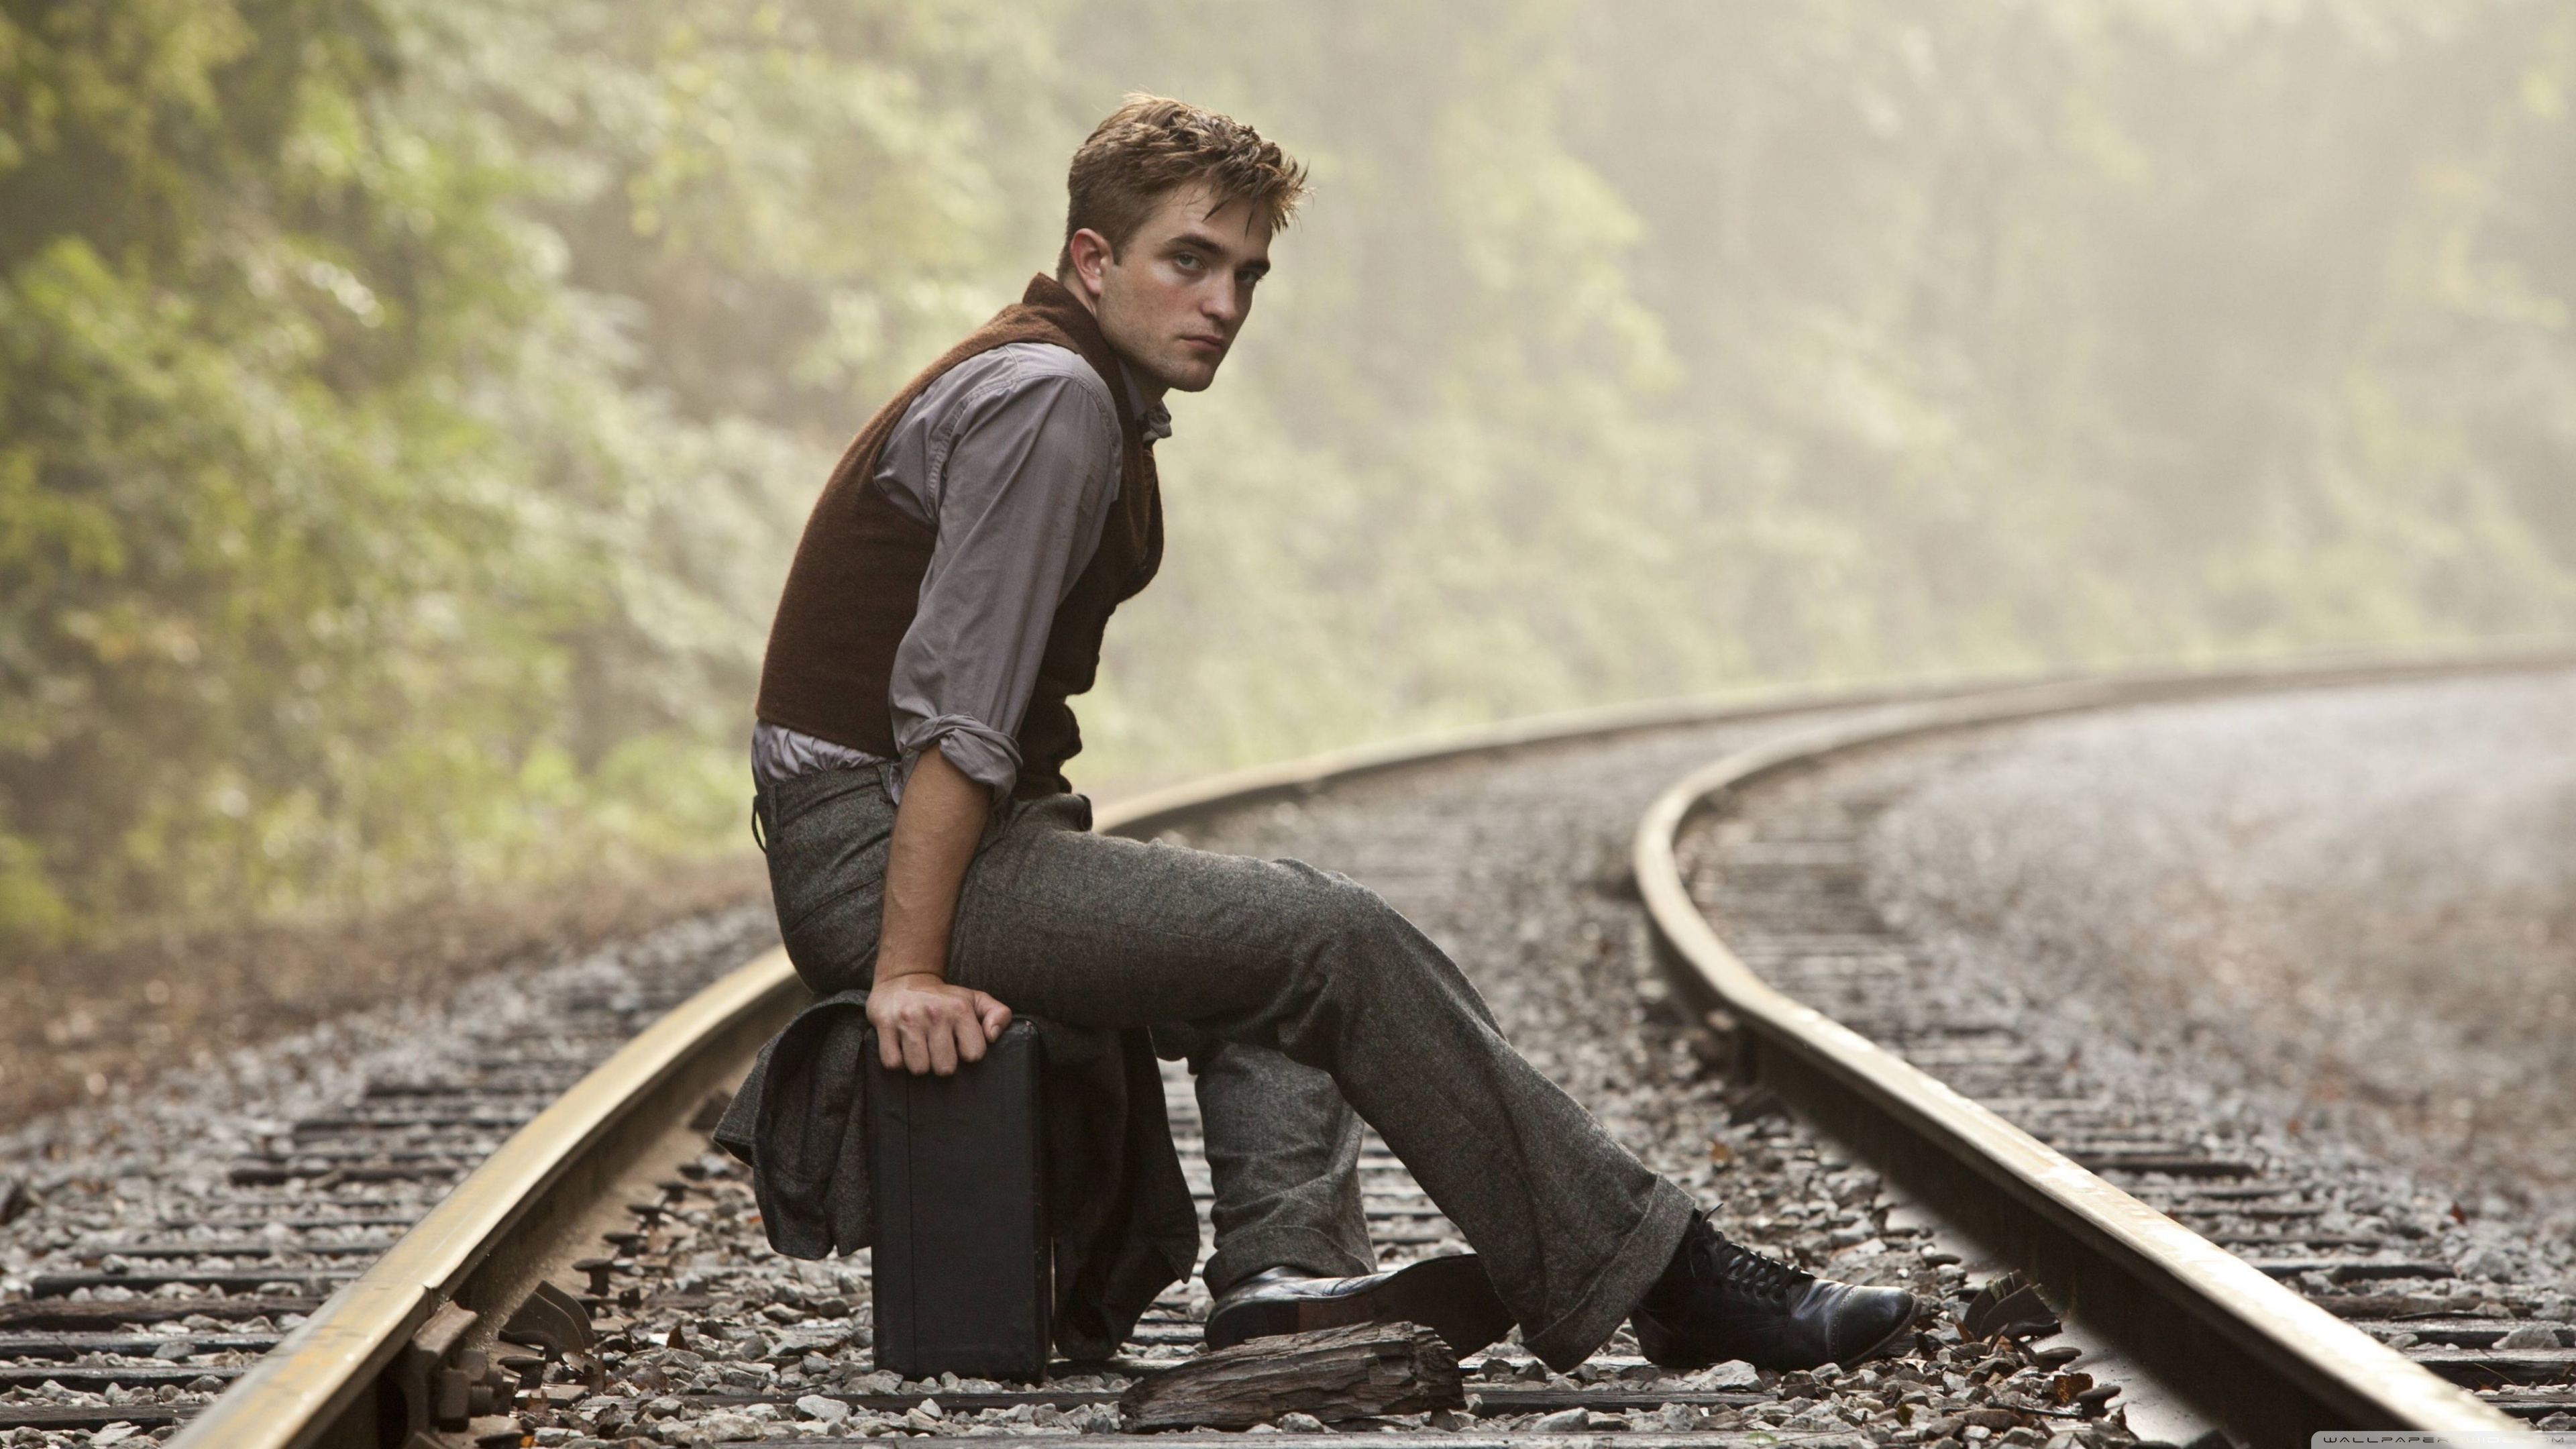 Robert Pattinson On Rail Track 4k HD Desktop Wallpaper For